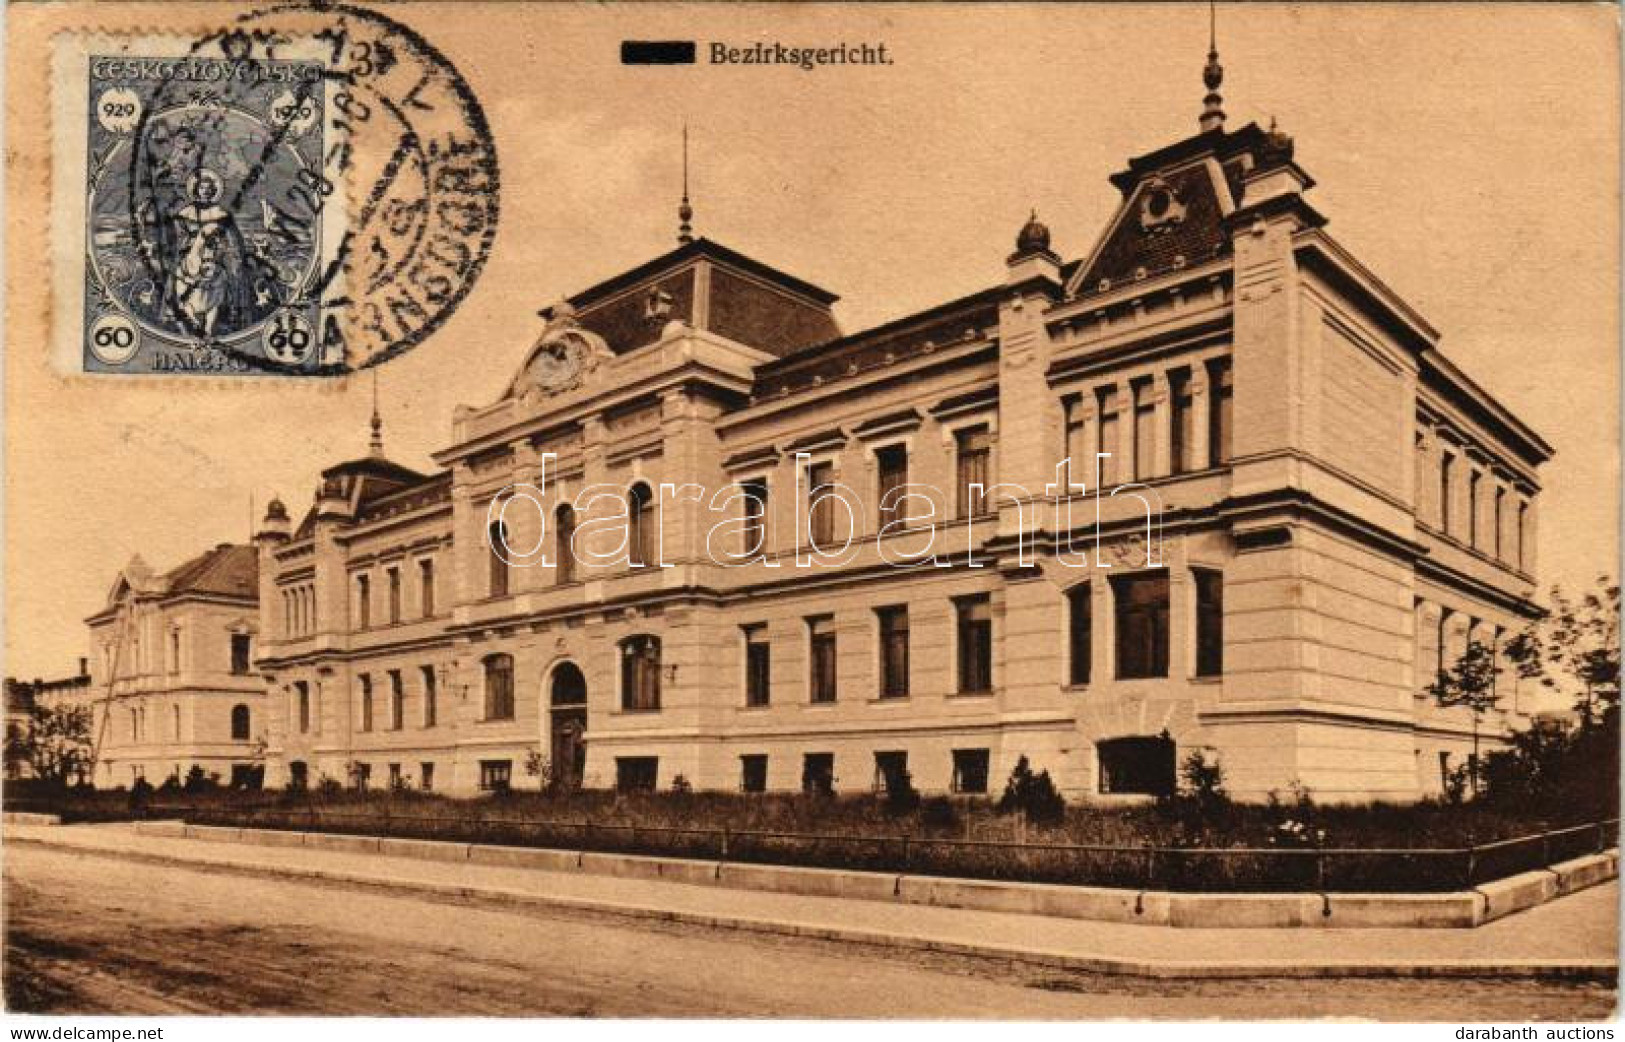 T3 1929 Varnsdorf, Warnsdorf; Bezirksgericht / District Court (EB) - Non Classificati